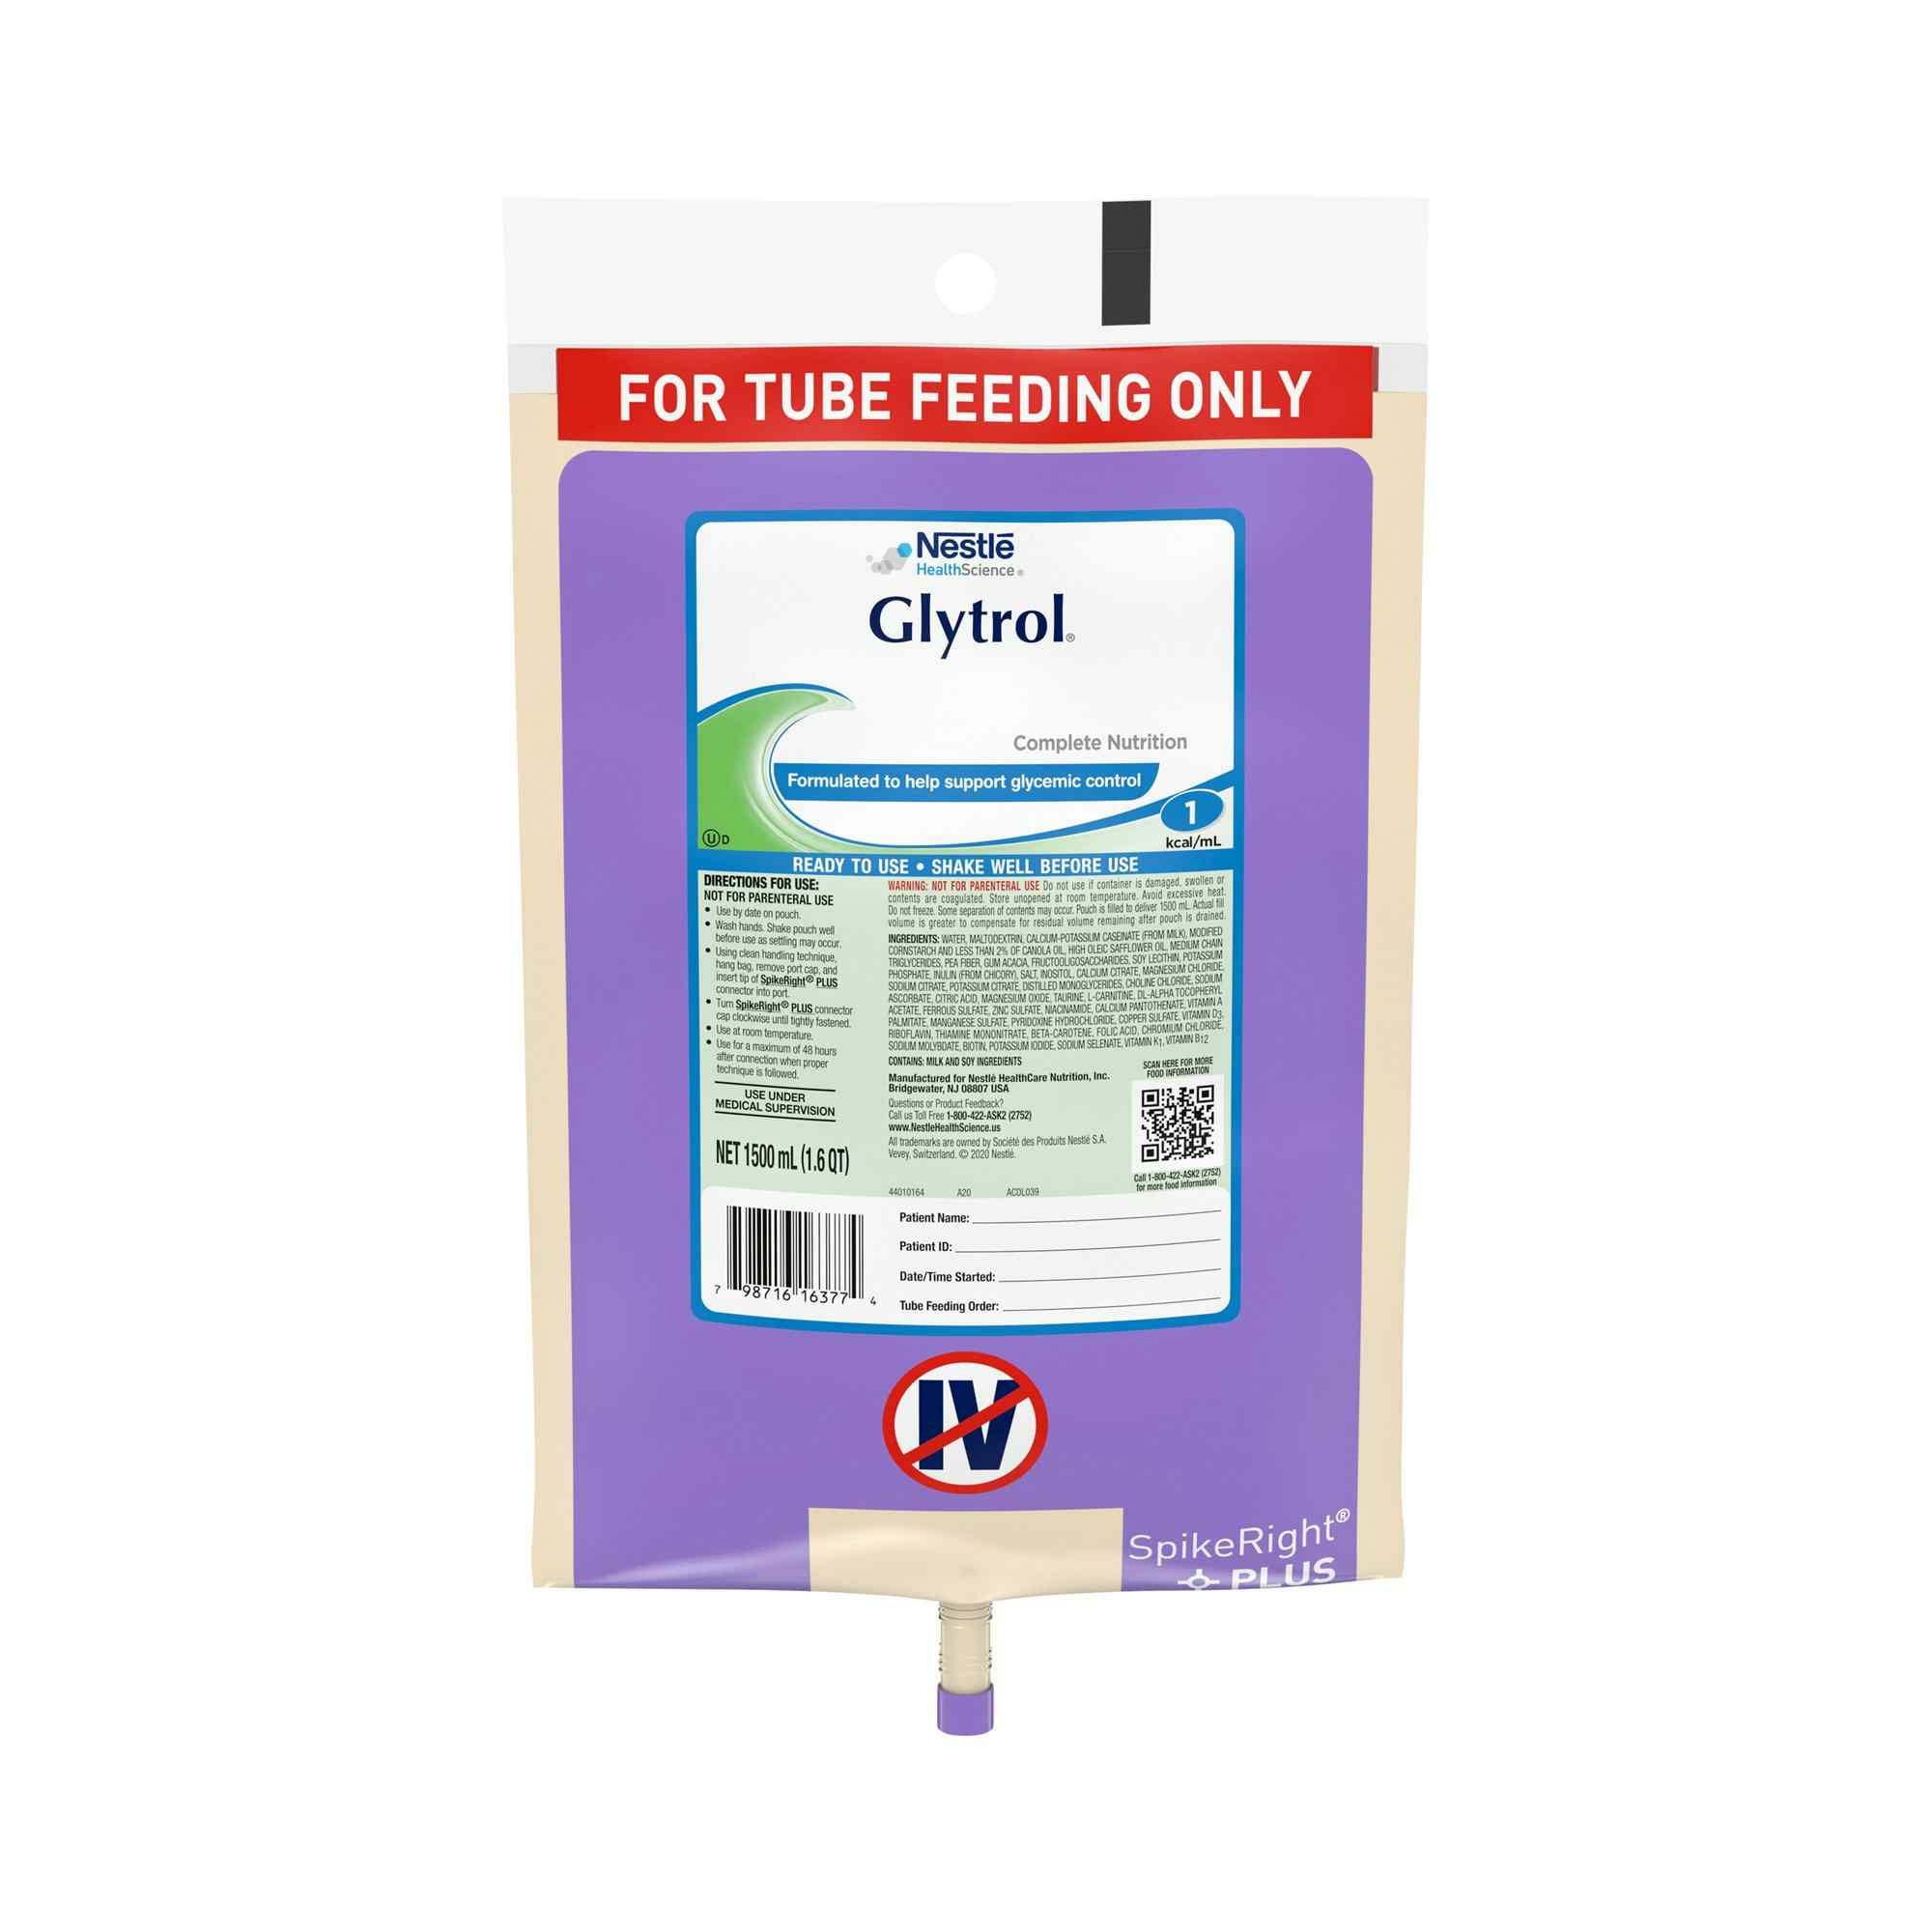 Nestle HealthScience Glytrol Complete Nutrition Tube Feeding Formula